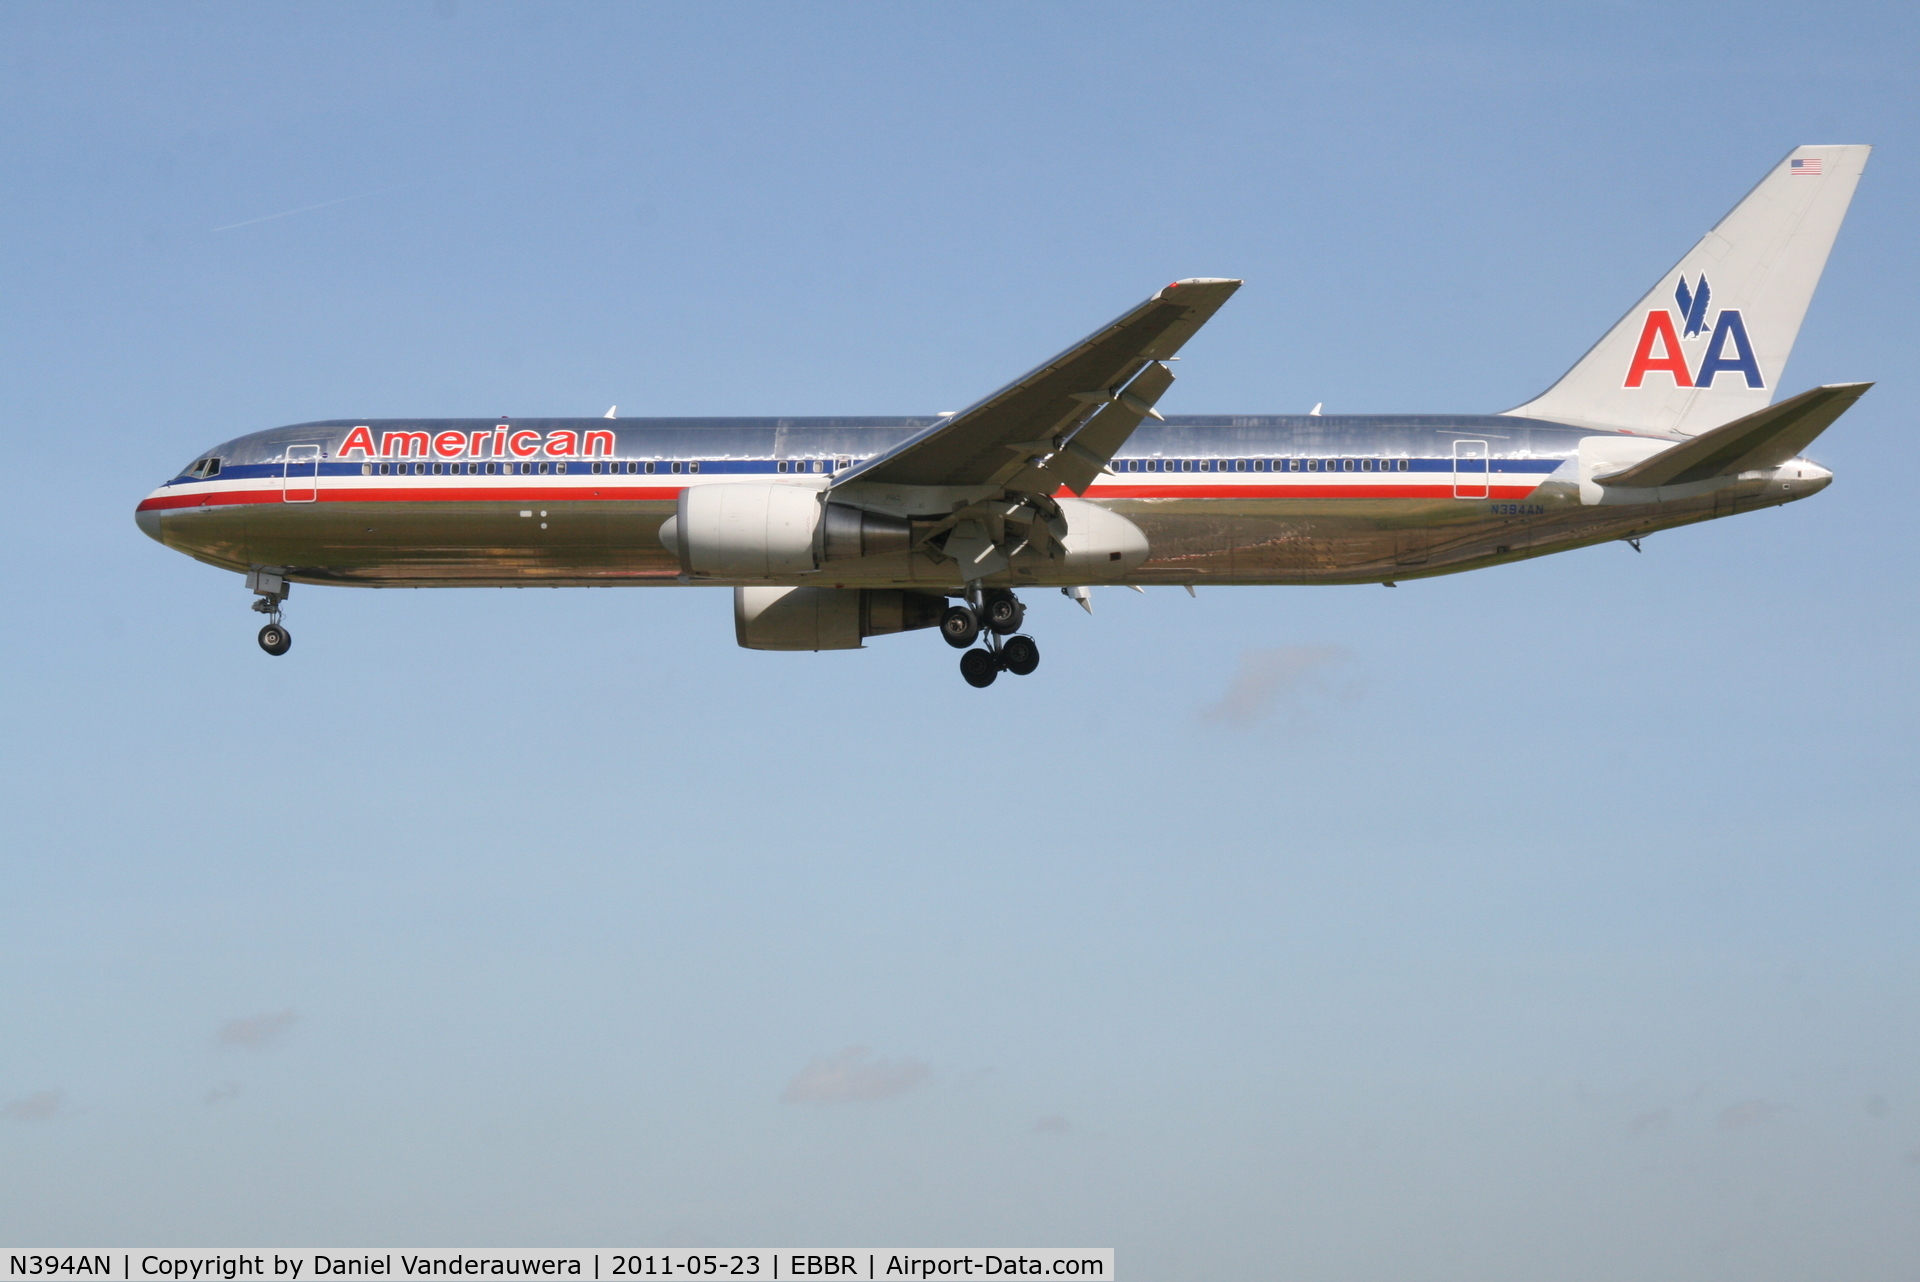 N394AN, 1998 Boeing 767-323/ER C/N 29431, Arrival of flight AA088 to RWY 25L